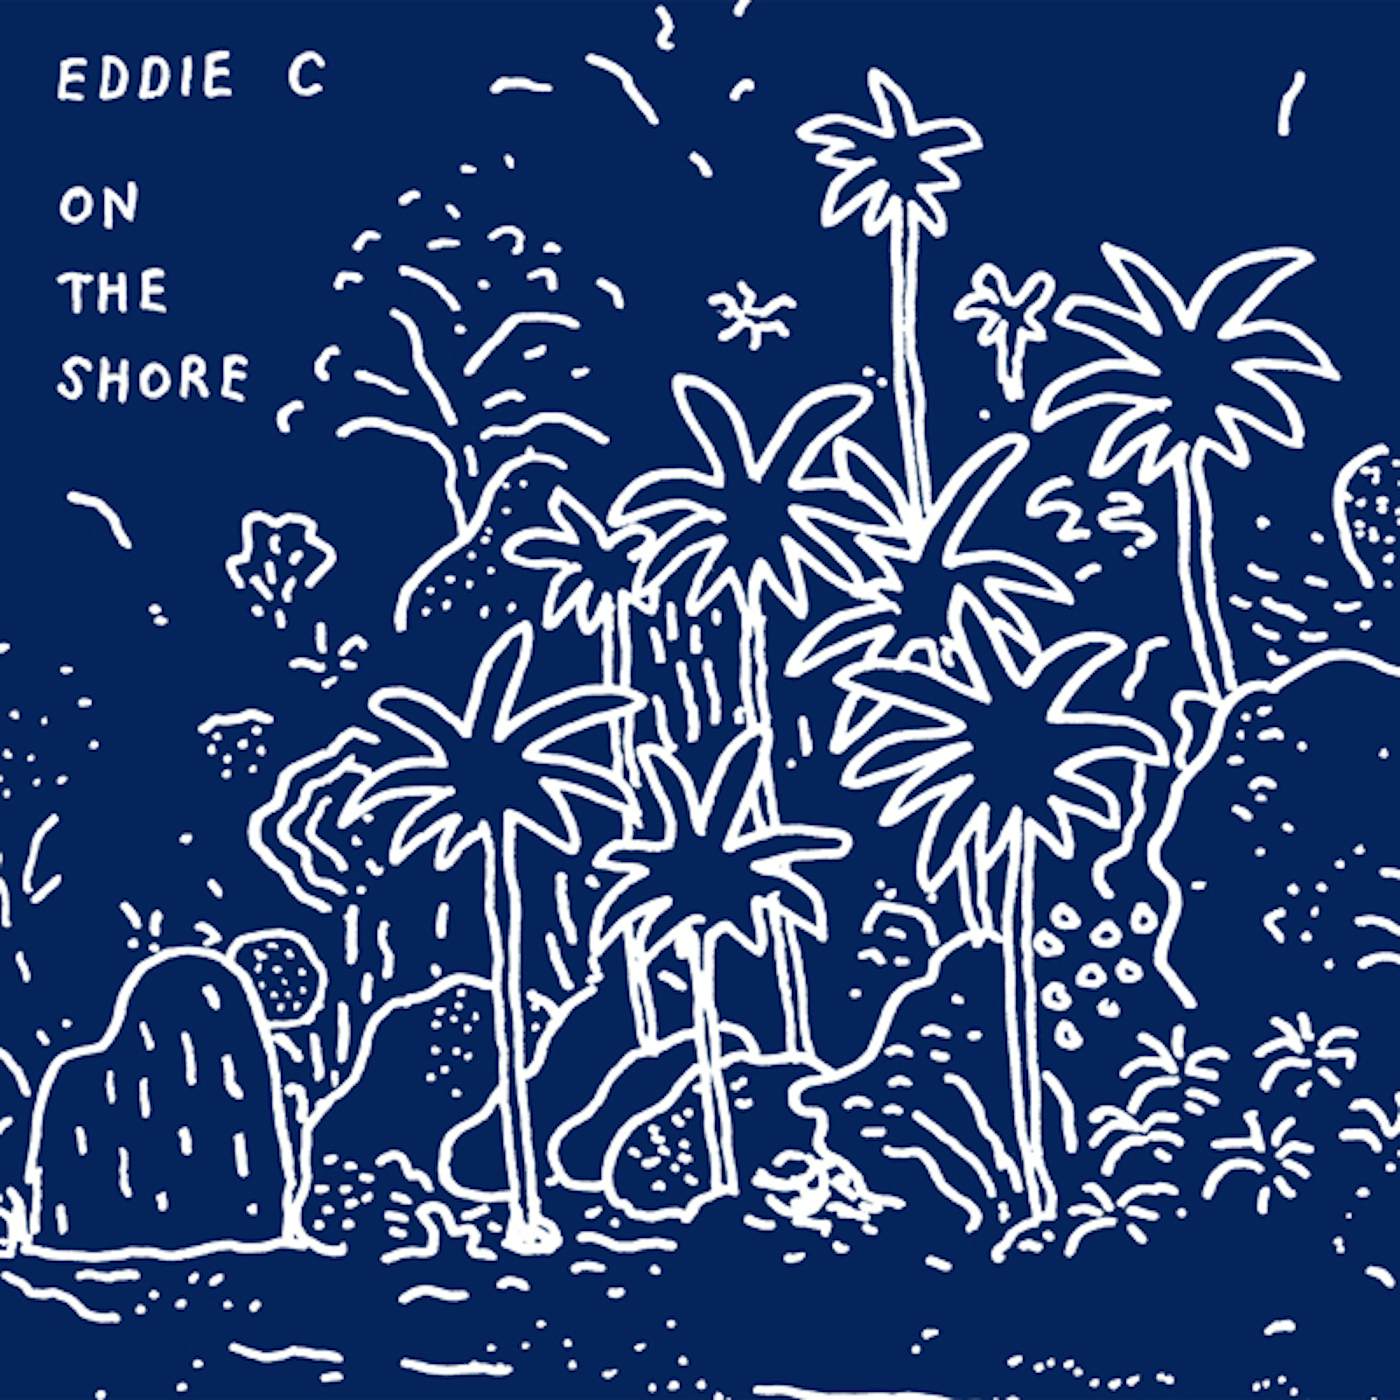 Eddie C ON THE SHORE CD